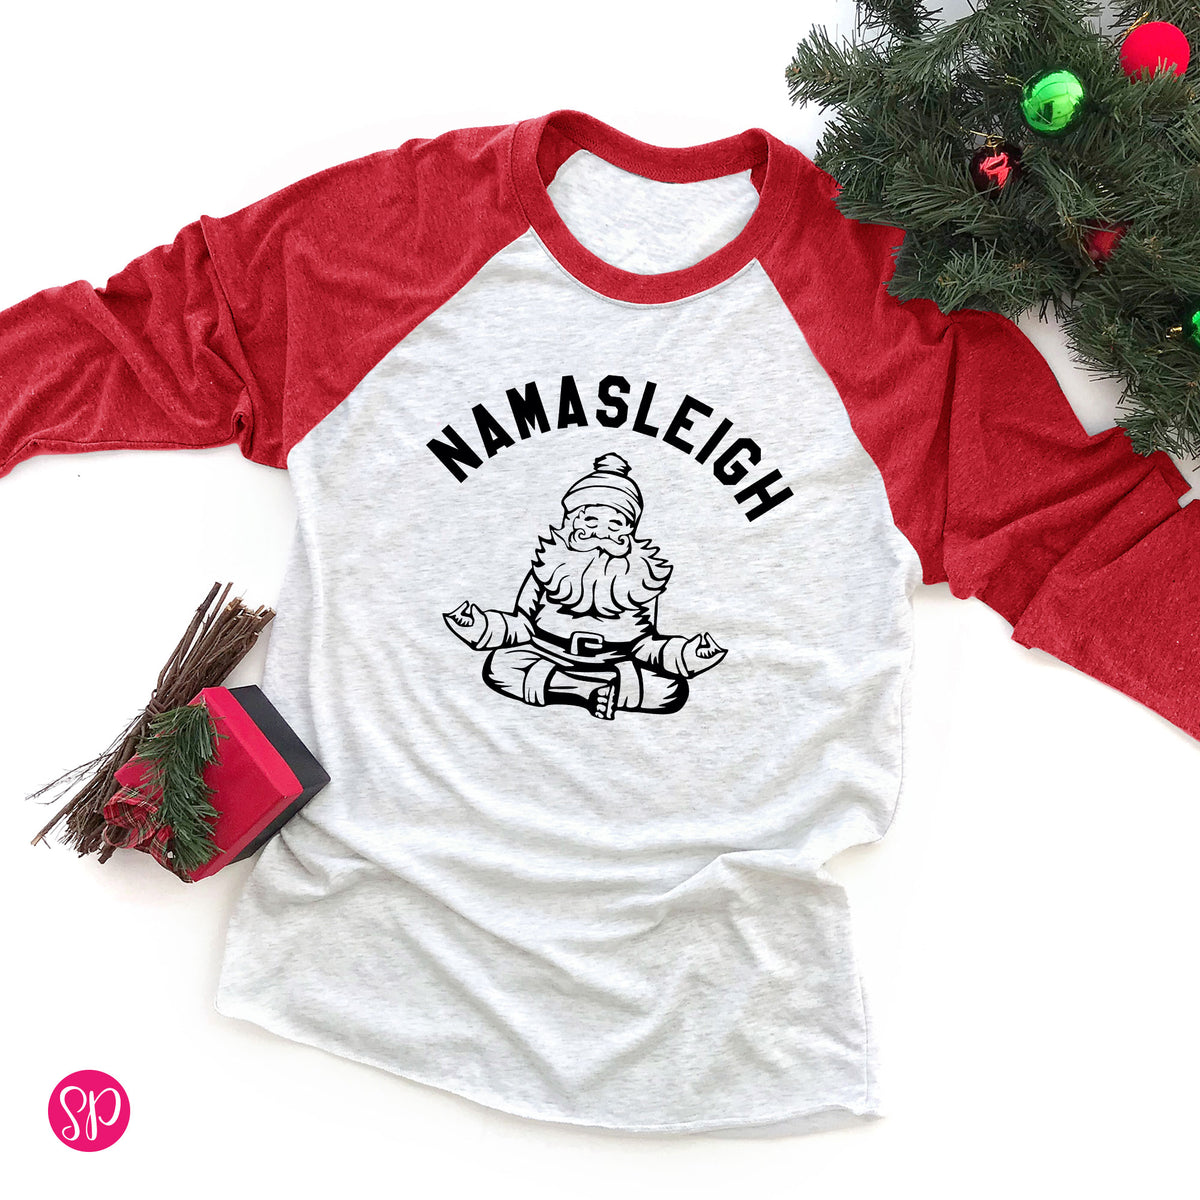 Namasleigh Yoga Yogi Santa Claus Womens Raglan Graphic Tee Shirt Long Sleeves